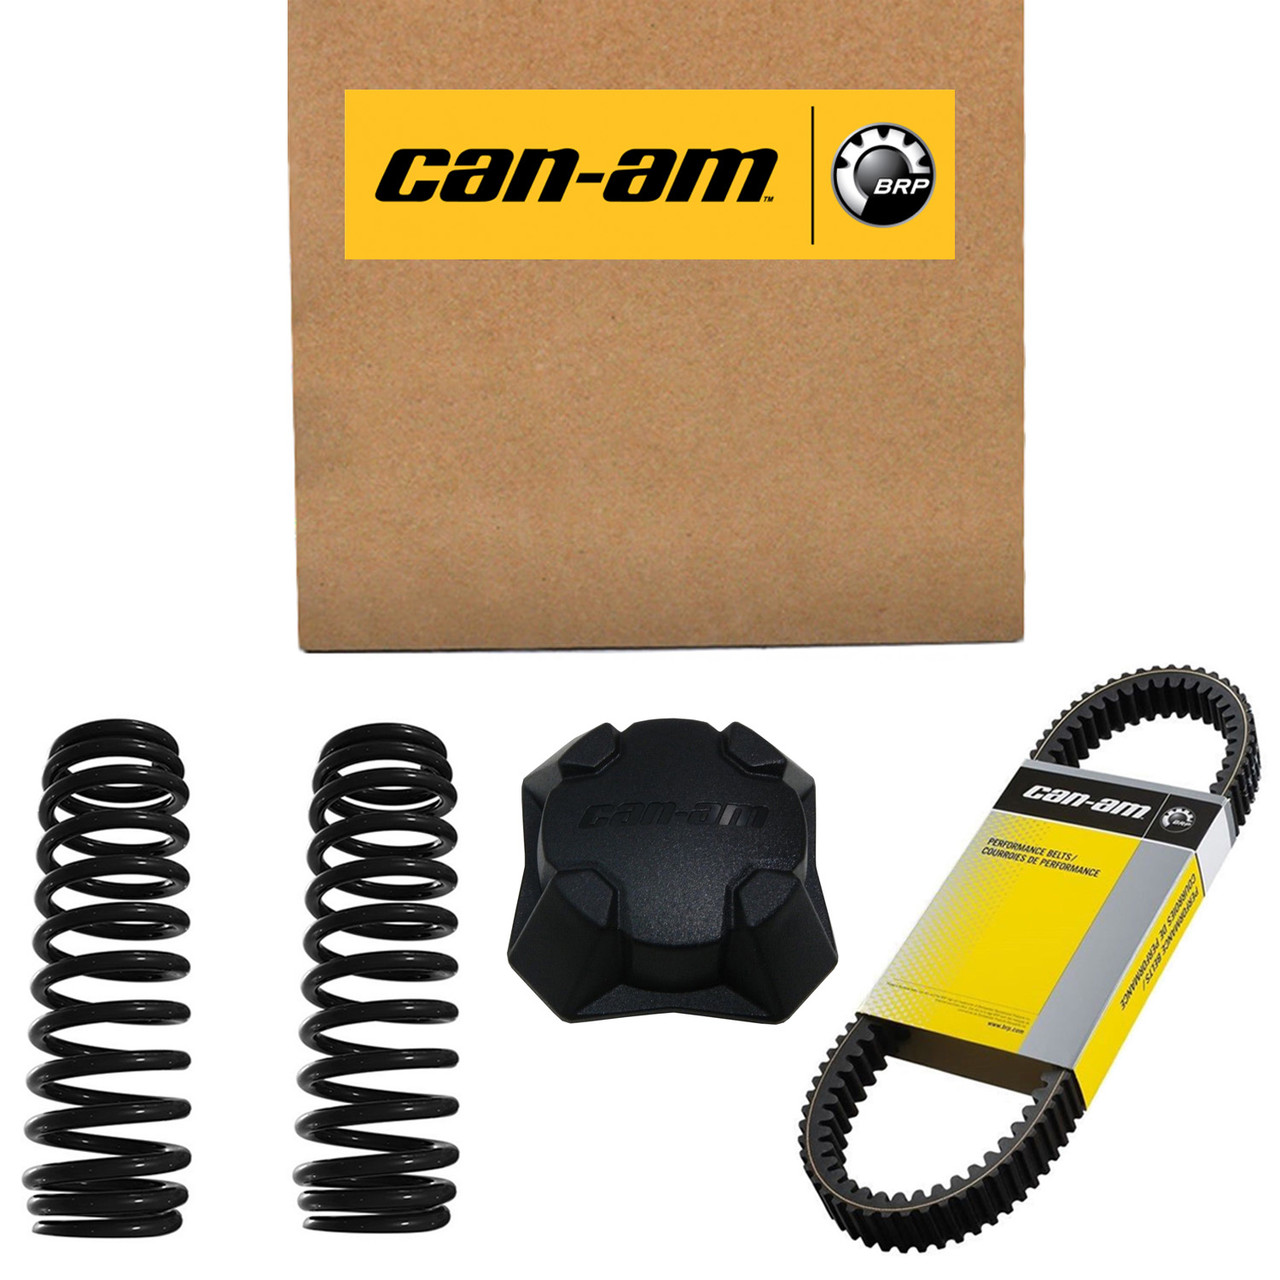 Can-Am New OEM Gear Box, 420686796